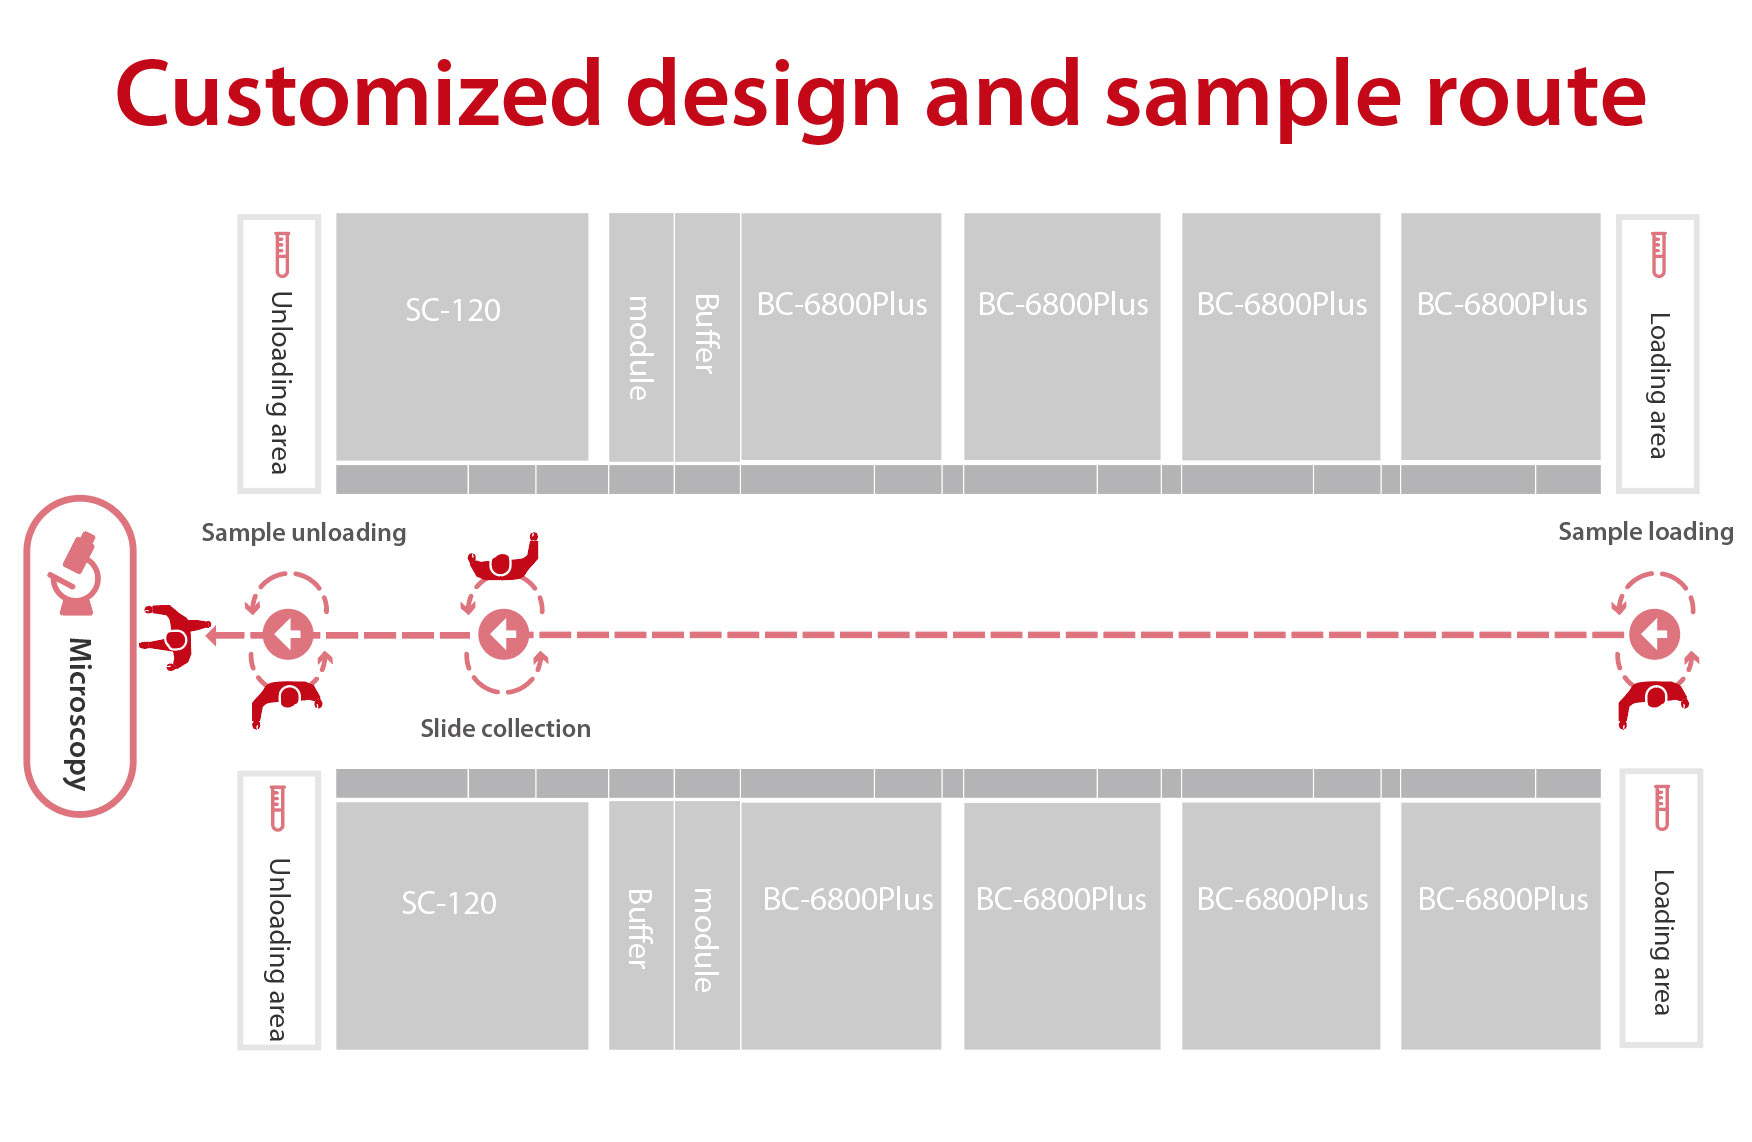 Image: Routes optimisation - Customized design and sample route(Photo courtesy of Mindray)